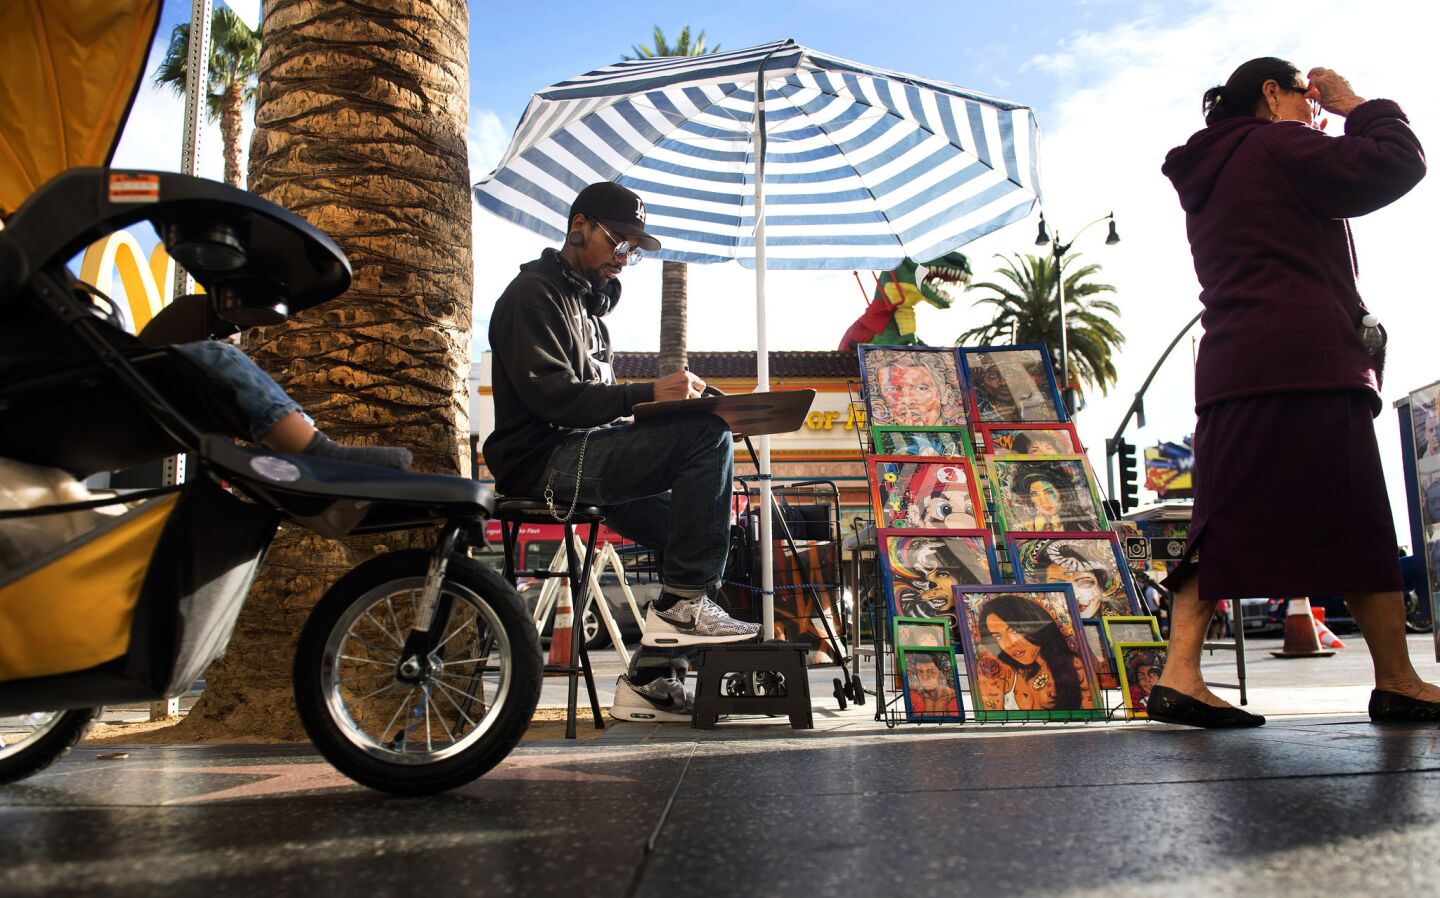 Street vendors on Hollywood Boulevard